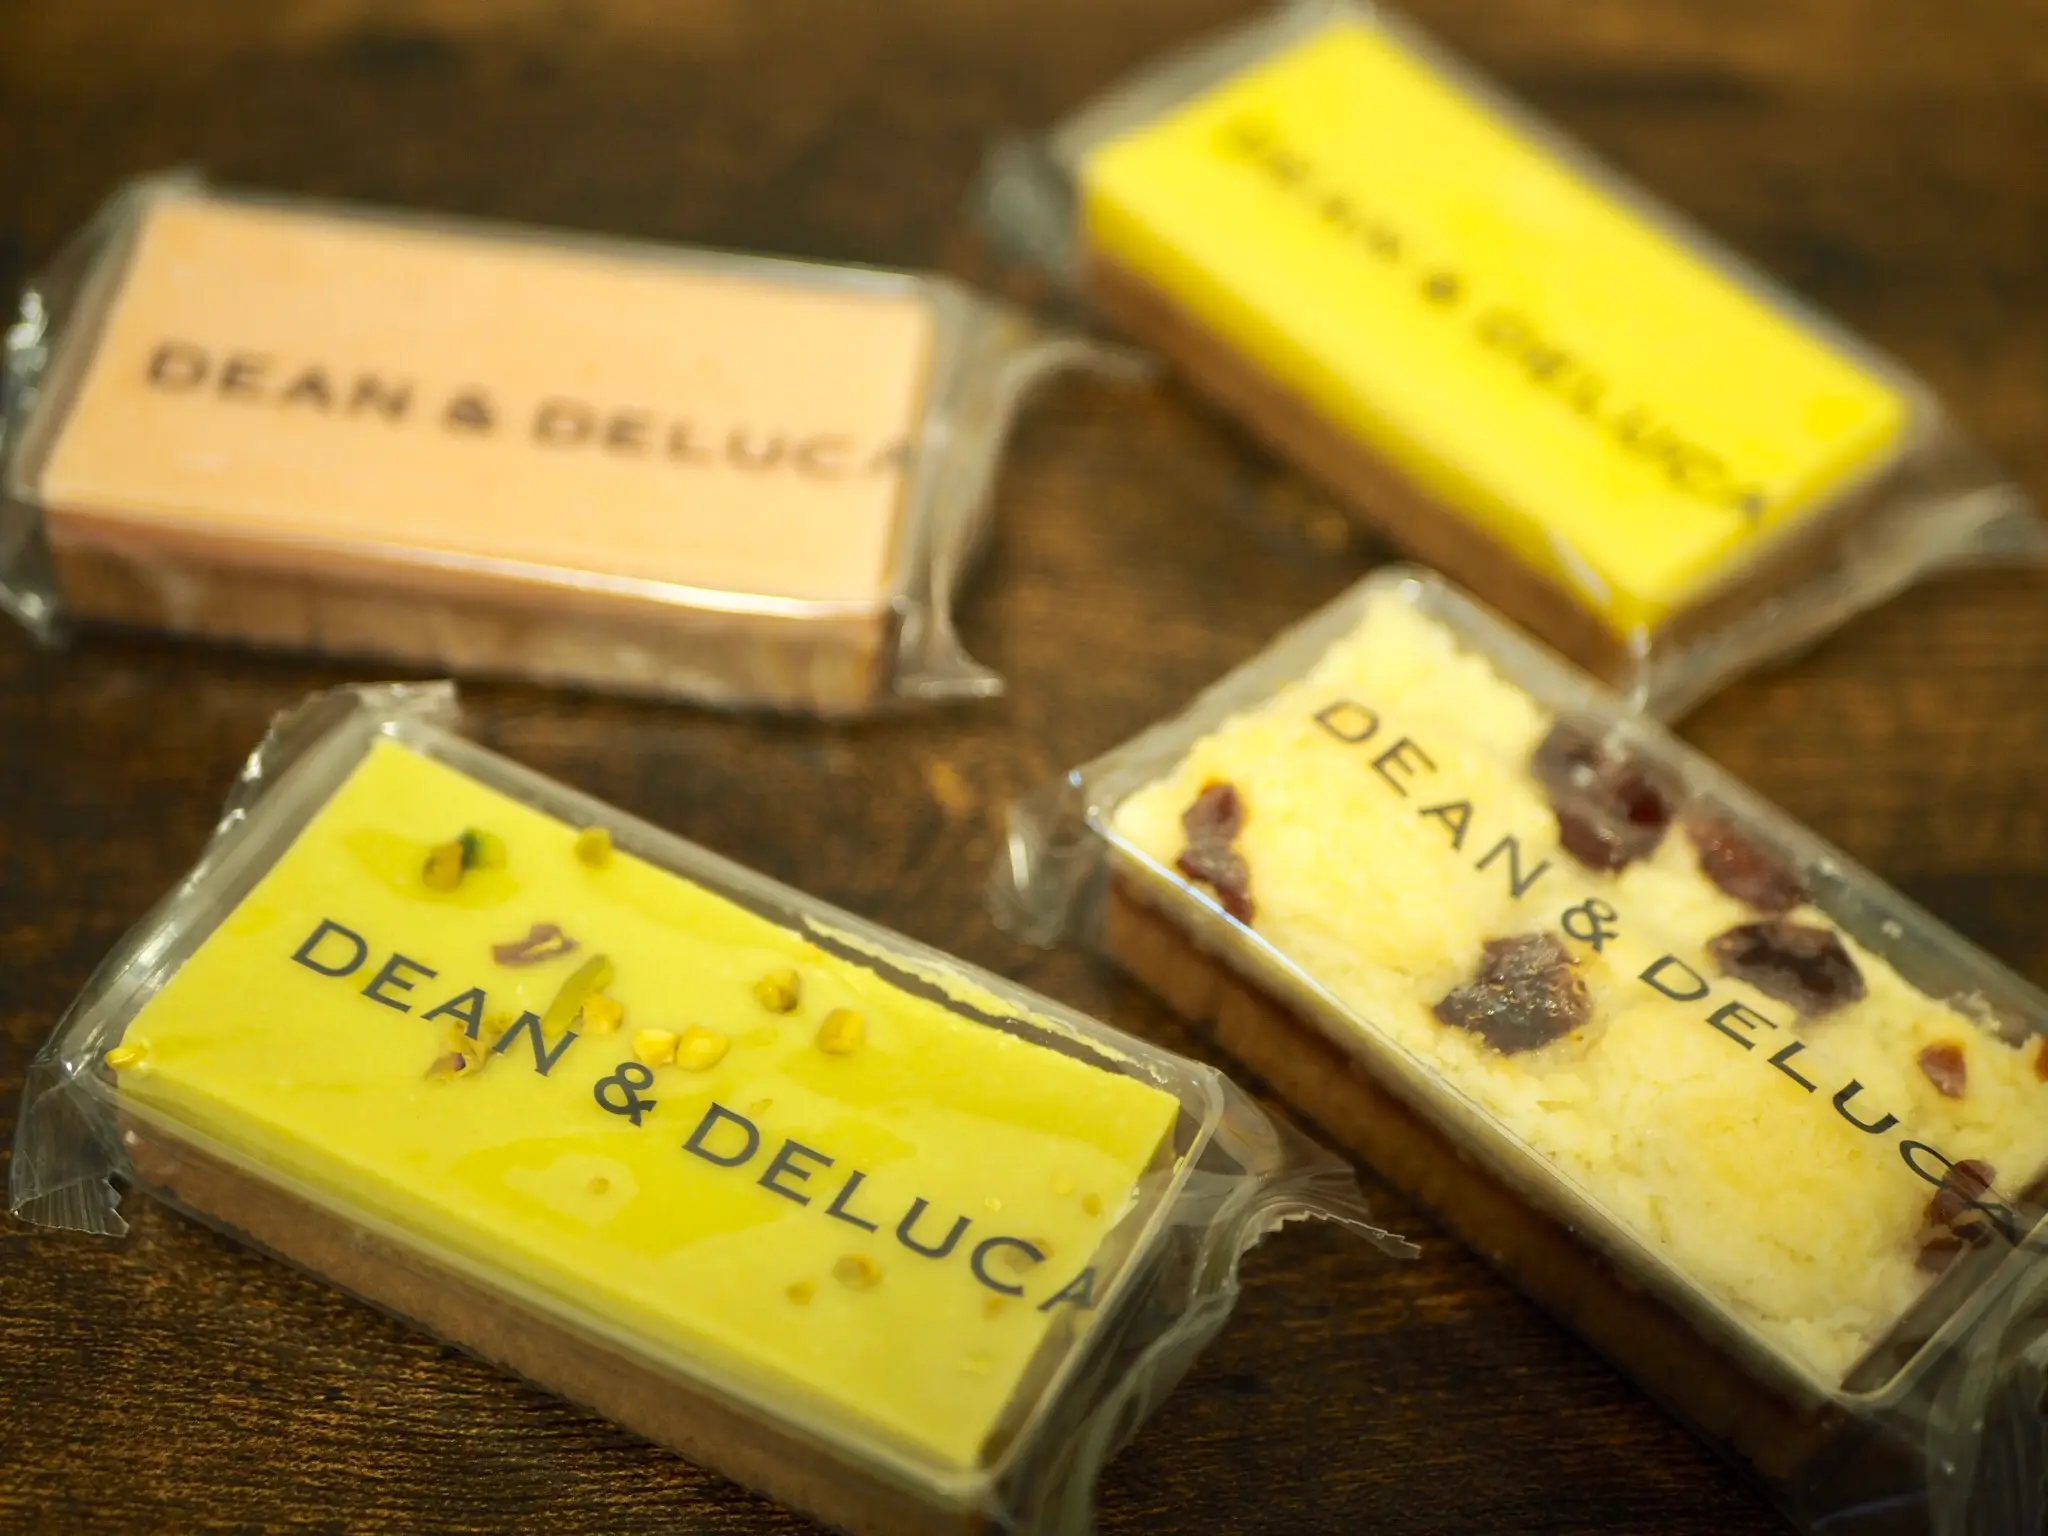 Dean Deluca のお洒落で可愛いプチお菓子ギフト Moreインフルエンサーズブログ Daily More